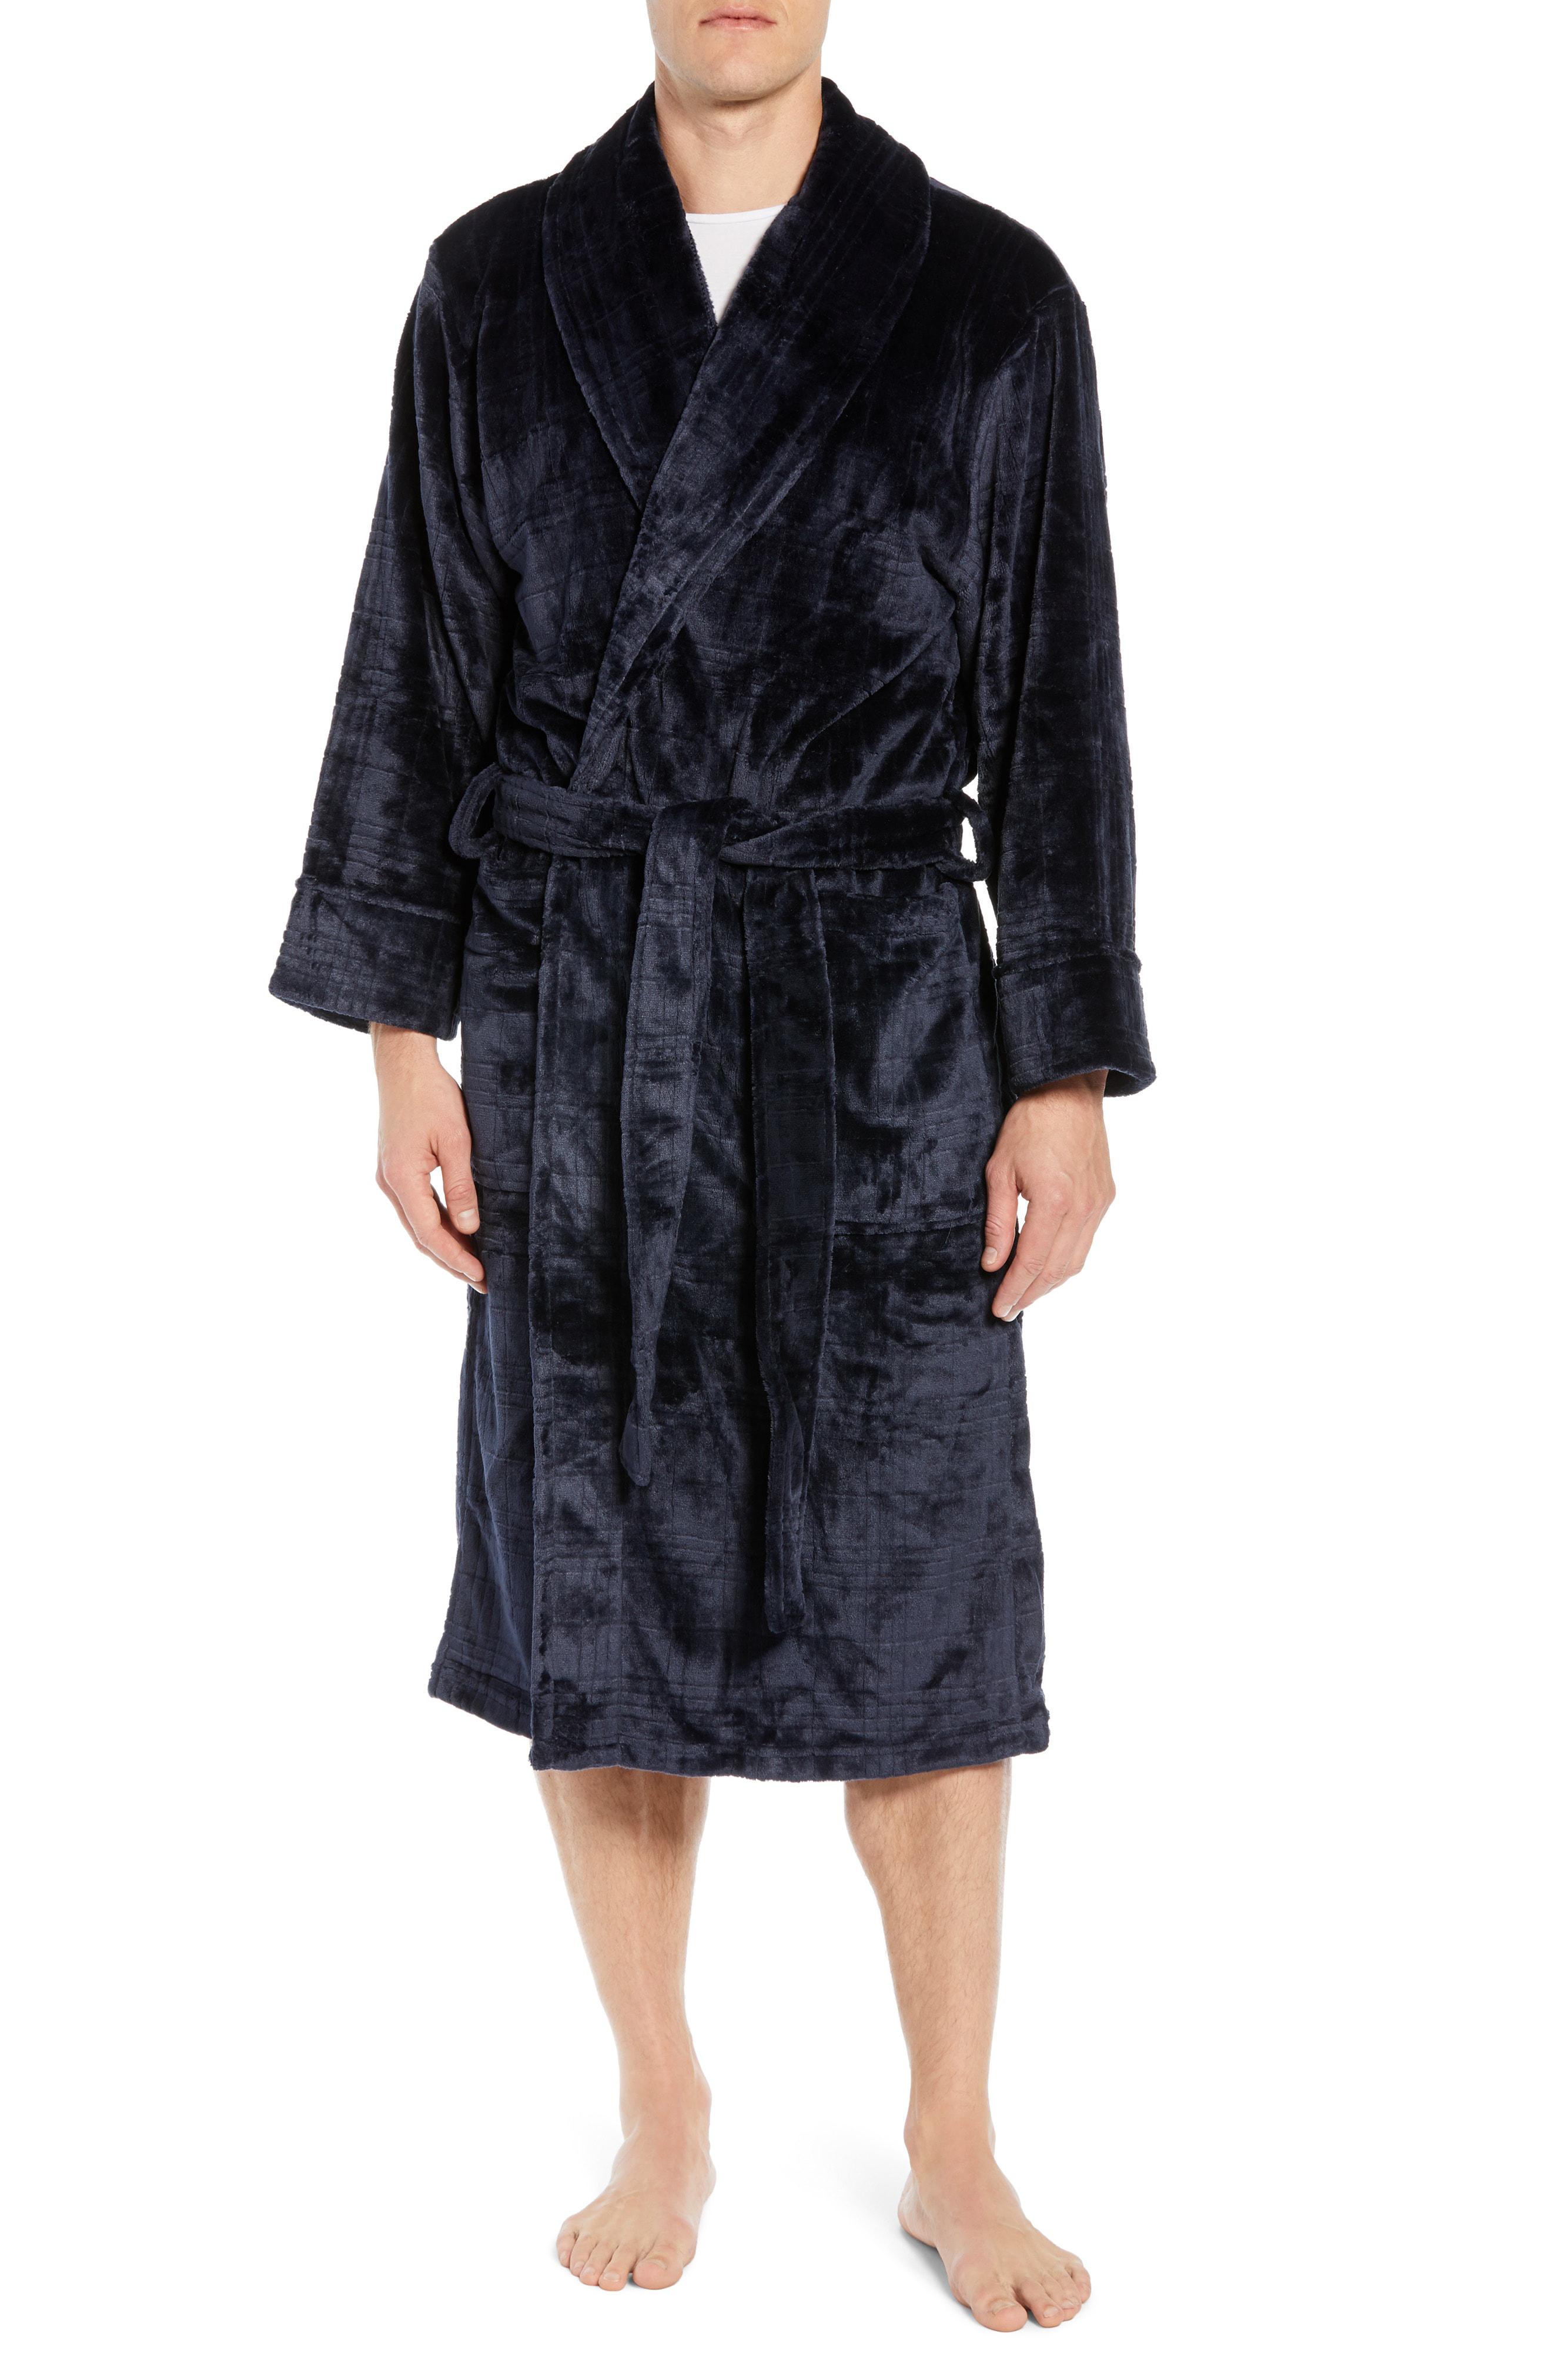 Lyst - Daniel Buchler Plaid Plush Jacquard Robe for Men